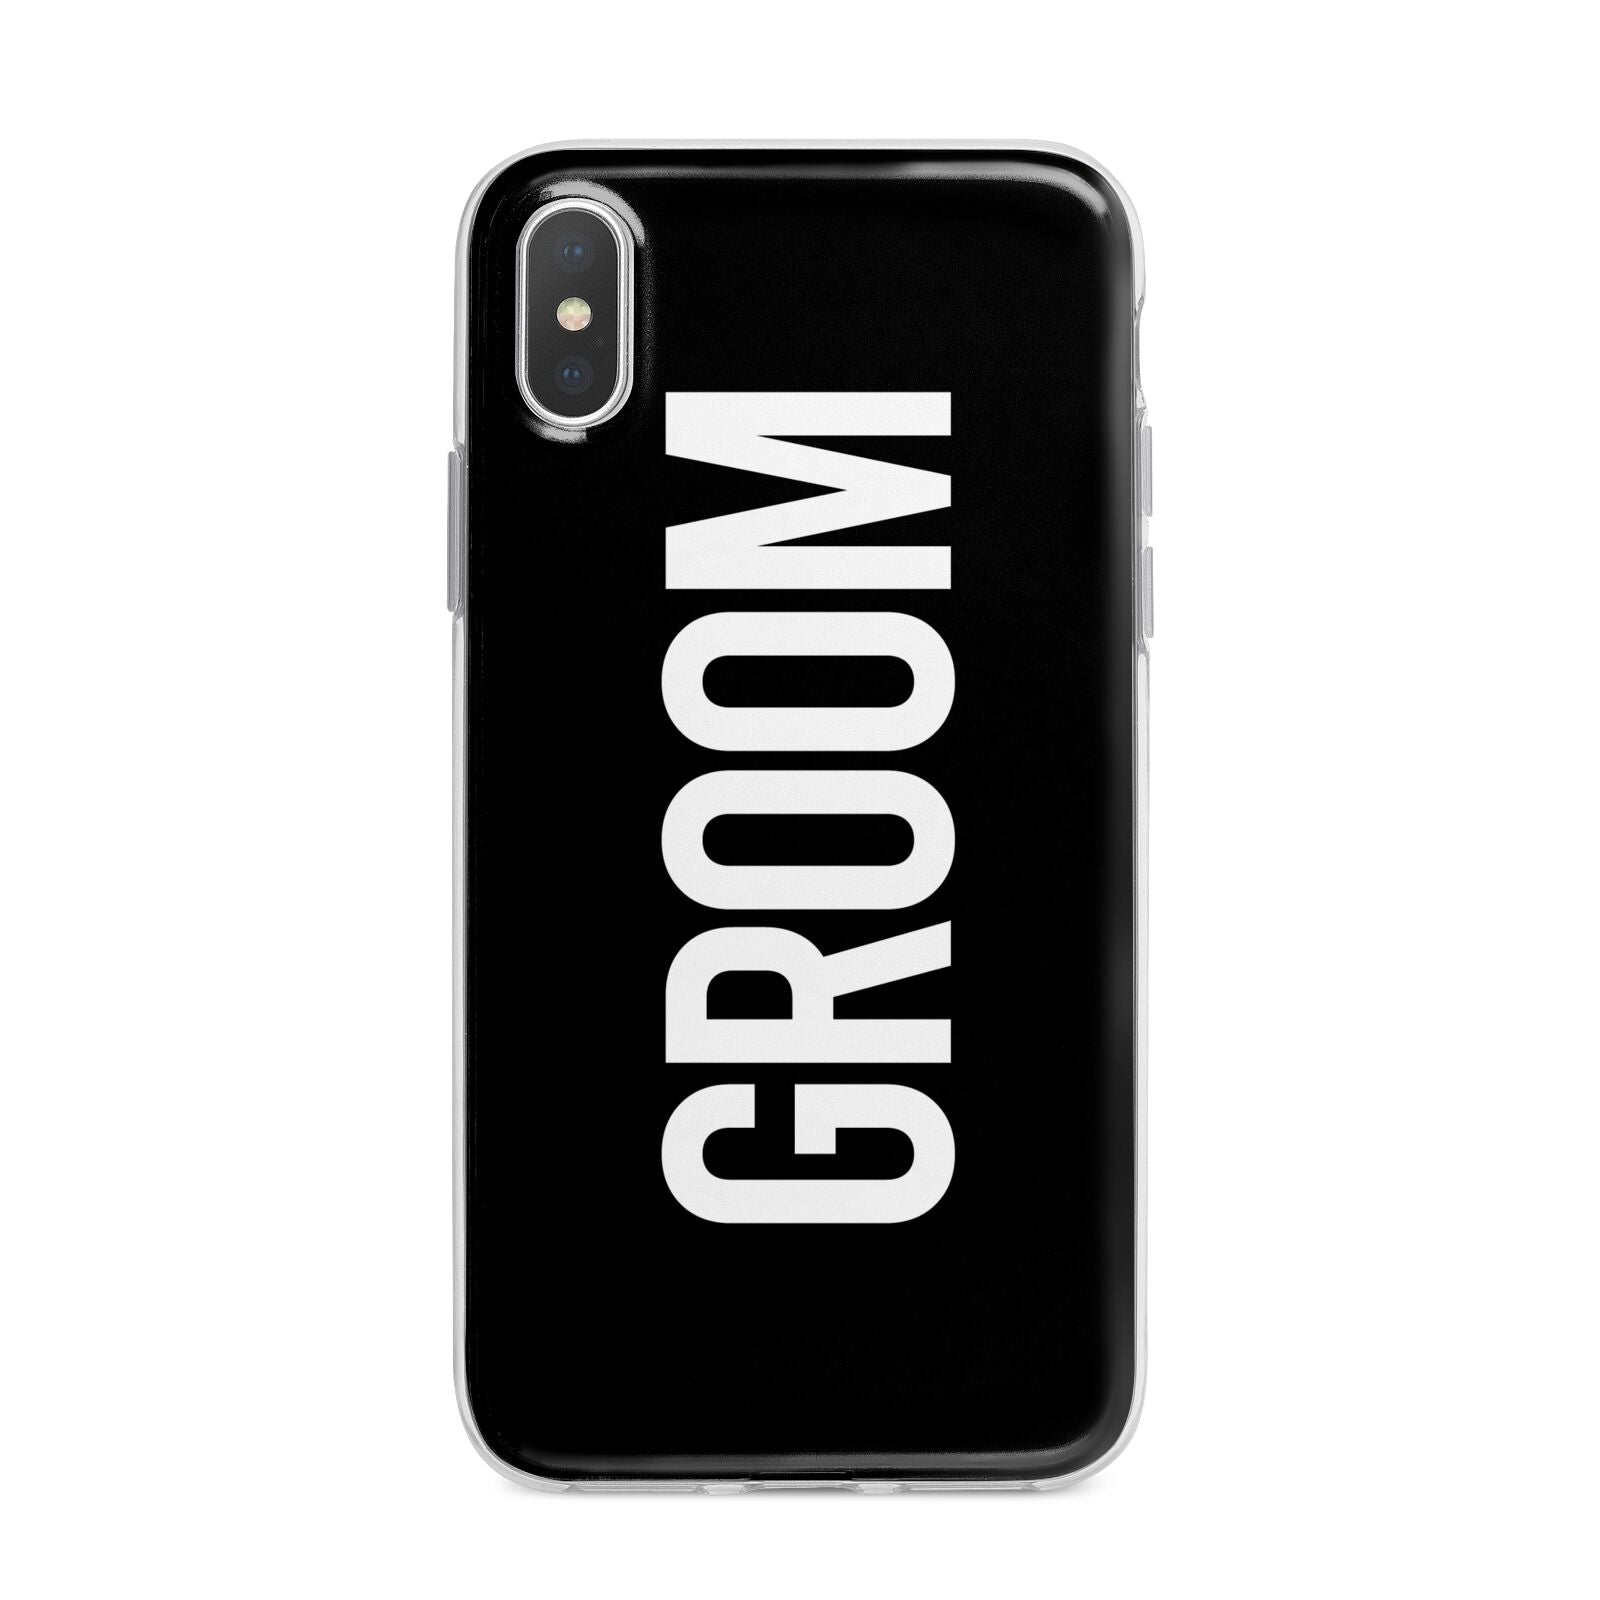 Groom iPhone X Bumper Case on Silver iPhone Alternative Image 1